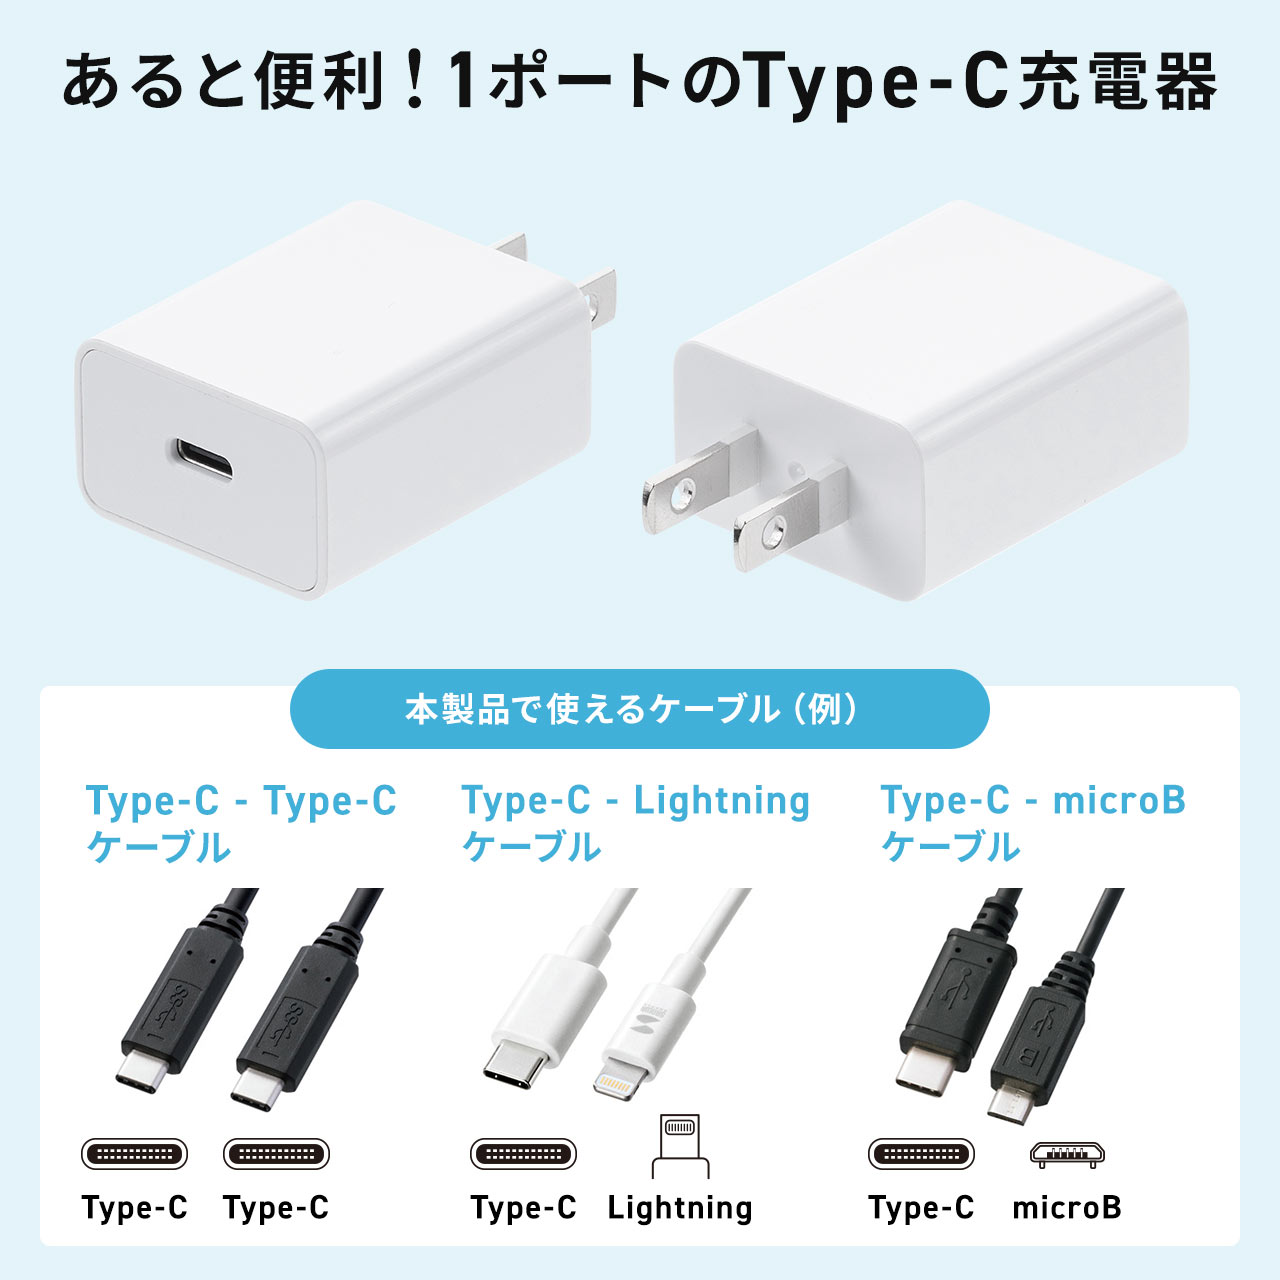 USB[d Type-C 1|[g 3A RpNg PSEKi Android iPhone iPad[dΉ Wi-Fi[^[ 700-AC033W